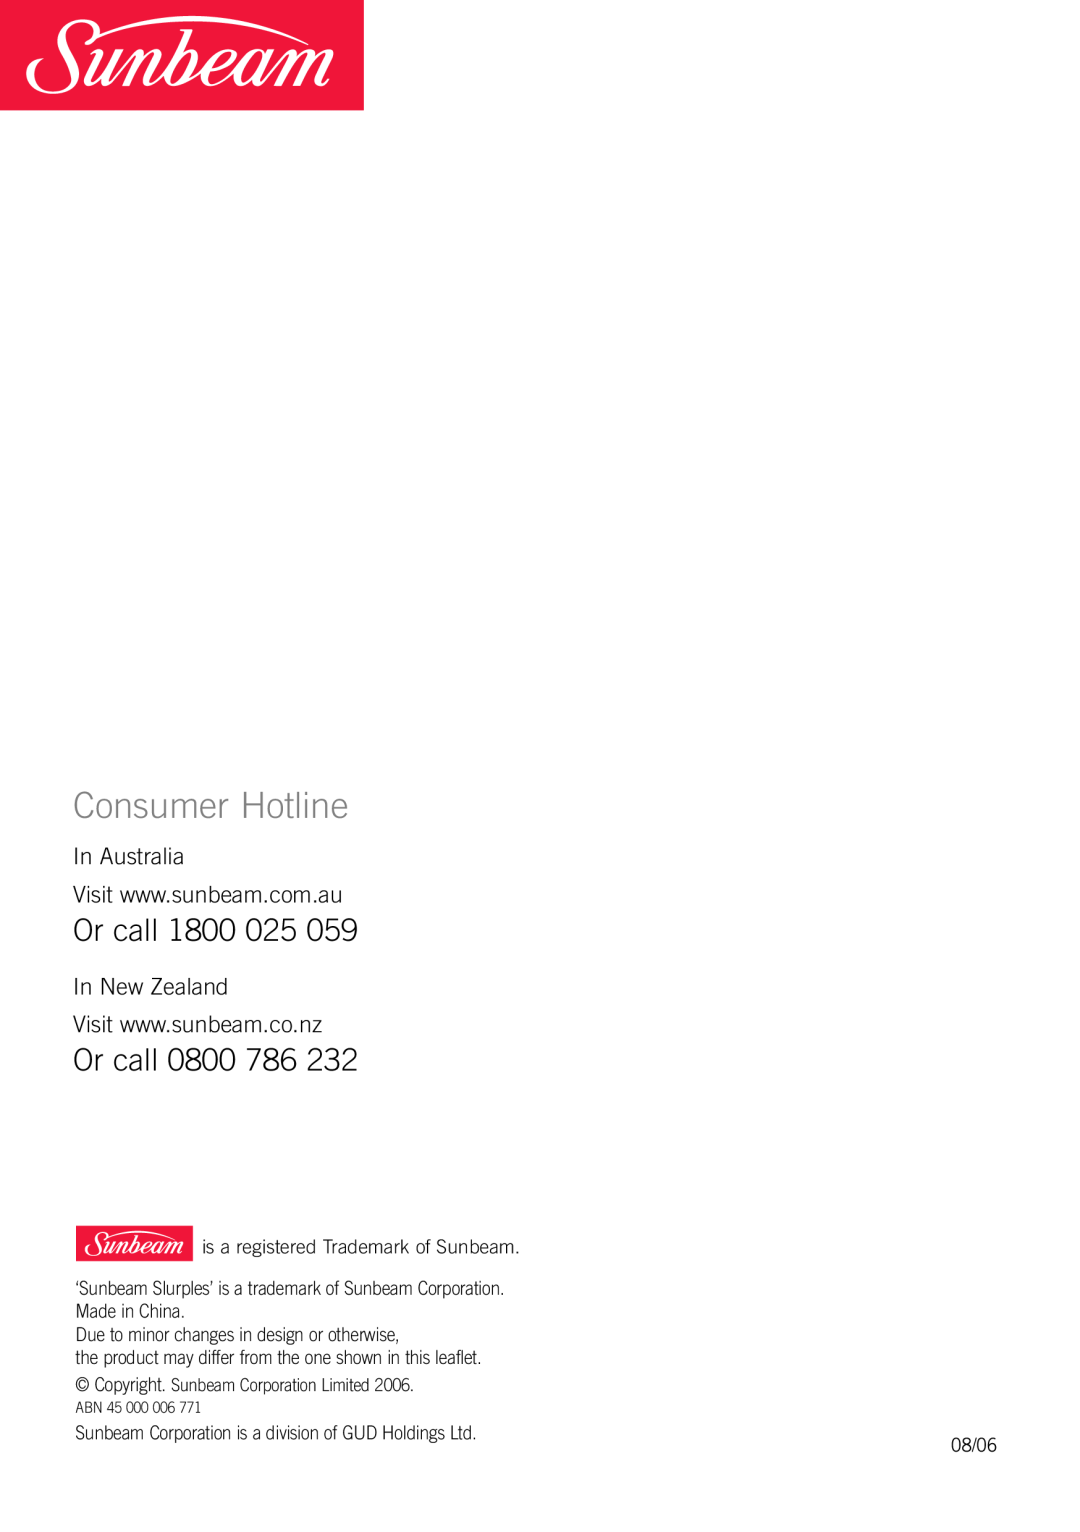 Sunbeam SL4600 manual Or call, Consumer Hotline 